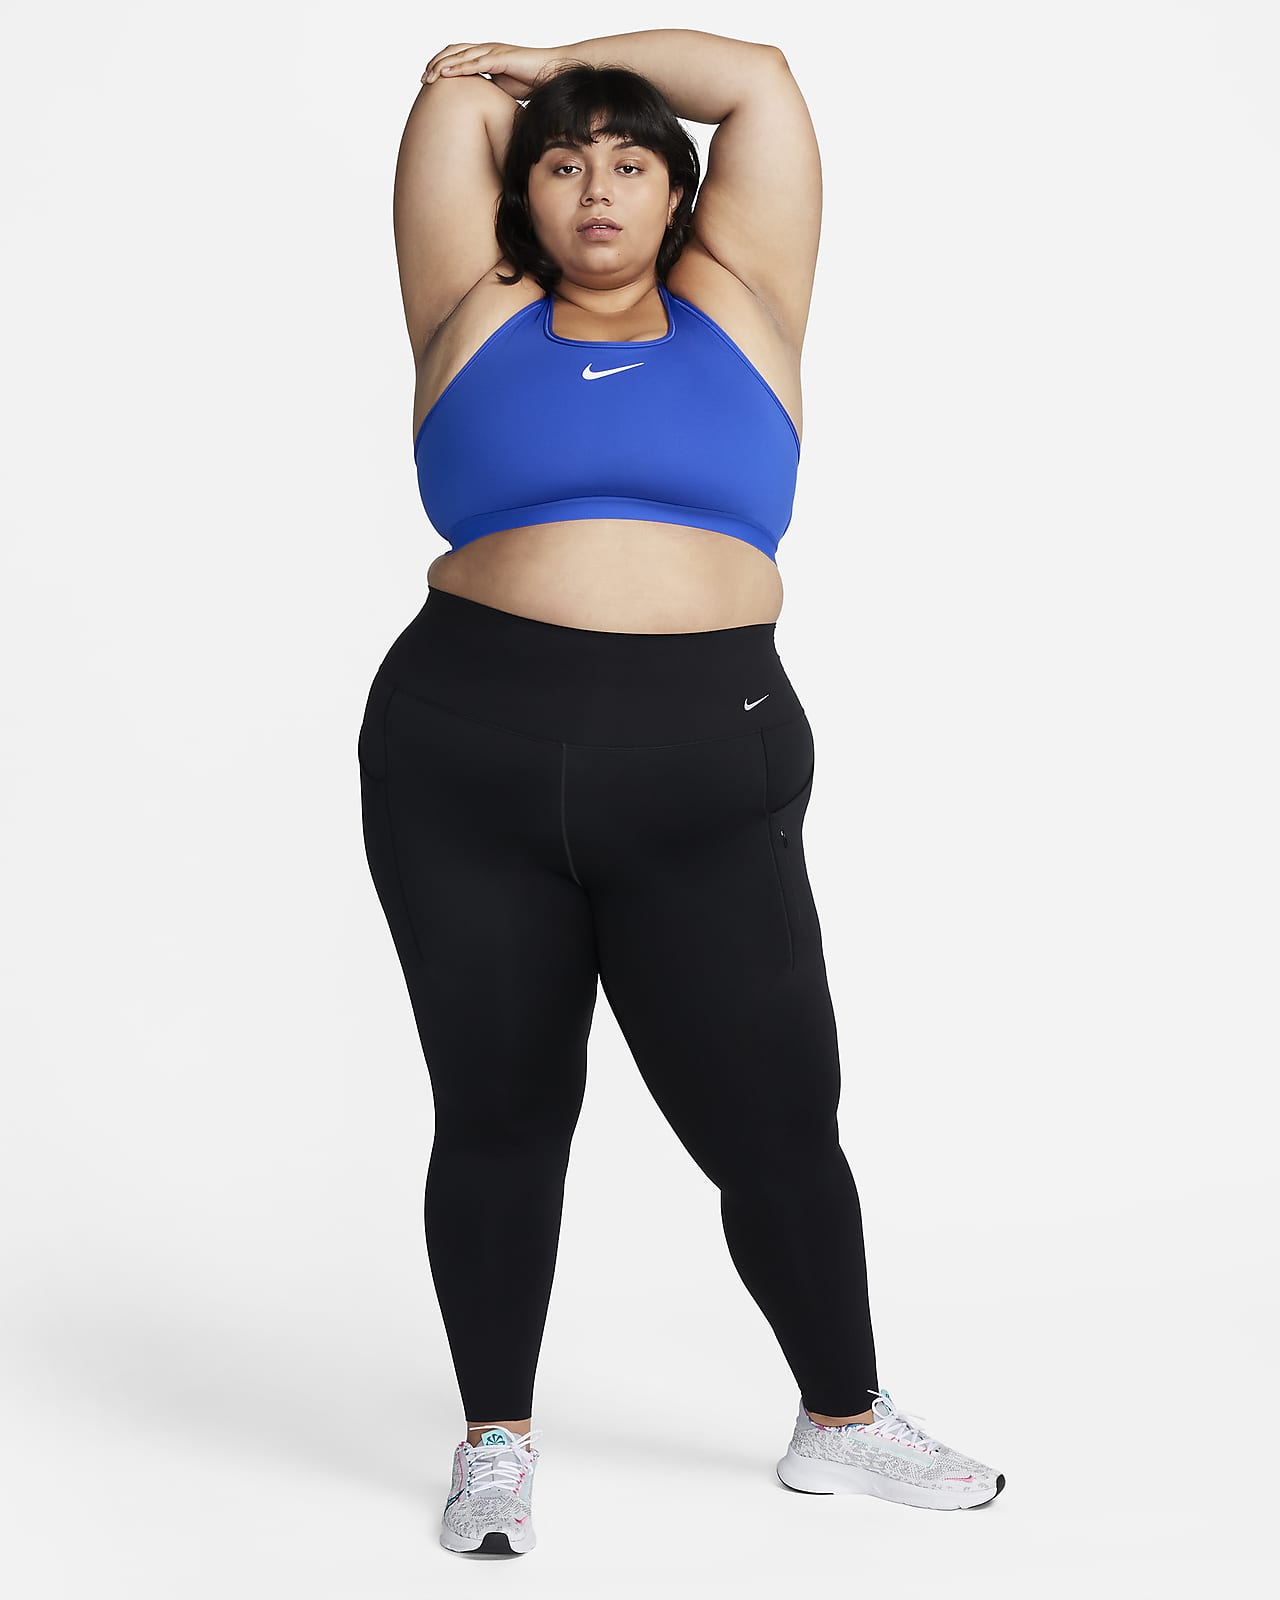 Nike Swoosh Bra Pad - Undershirts And Fitness Tops